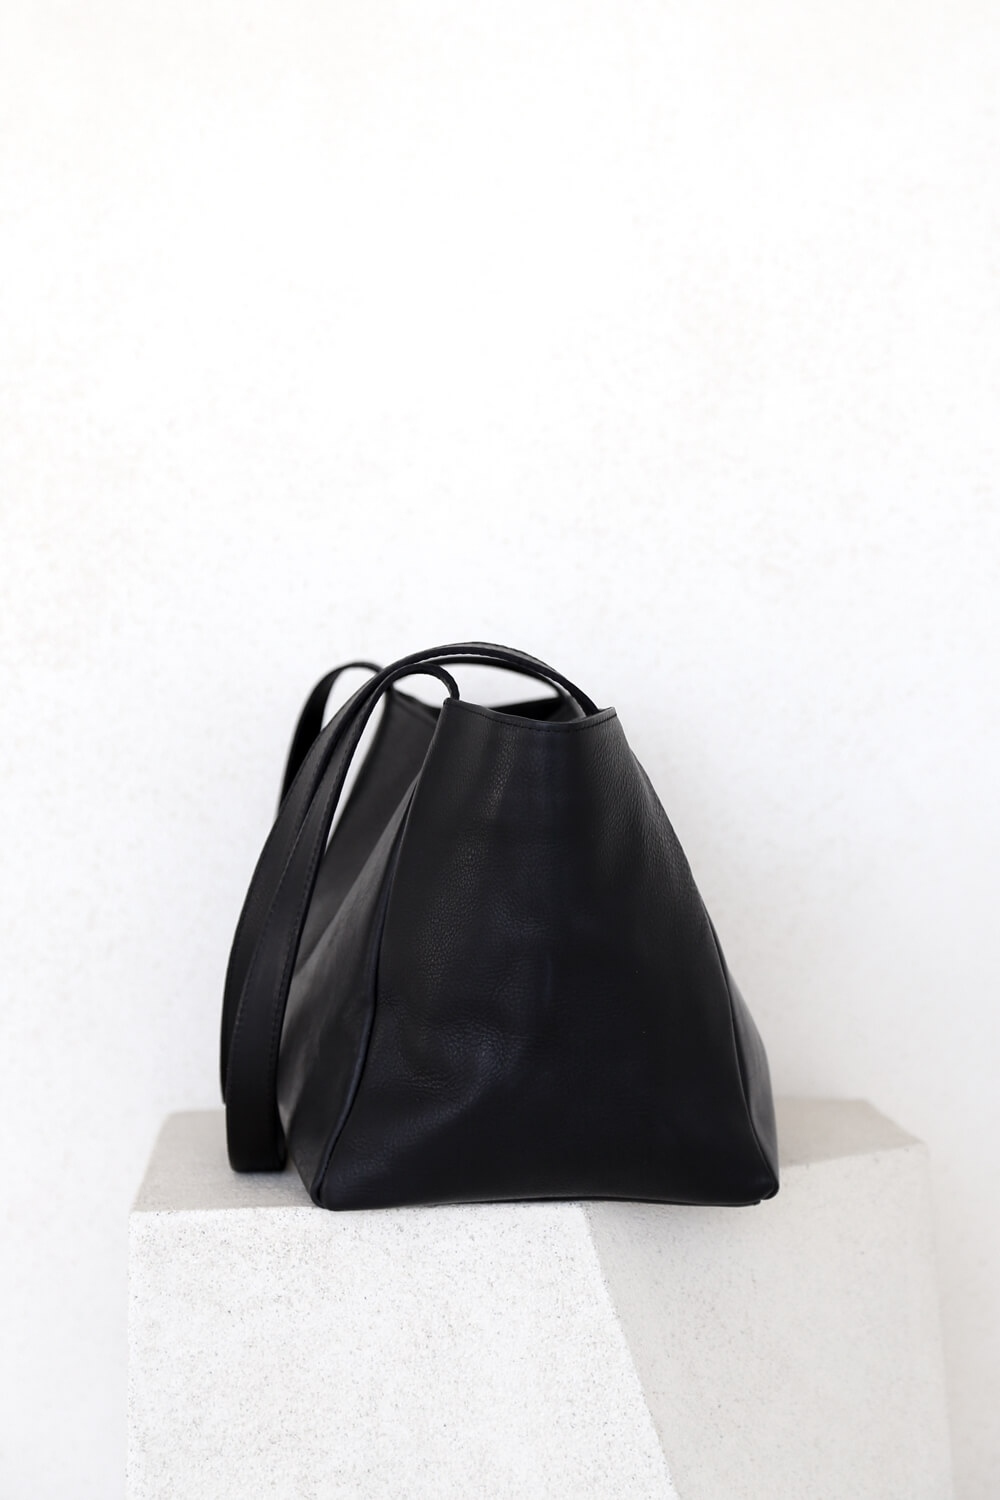 Open Tote Black - Corîu - Leather Bags